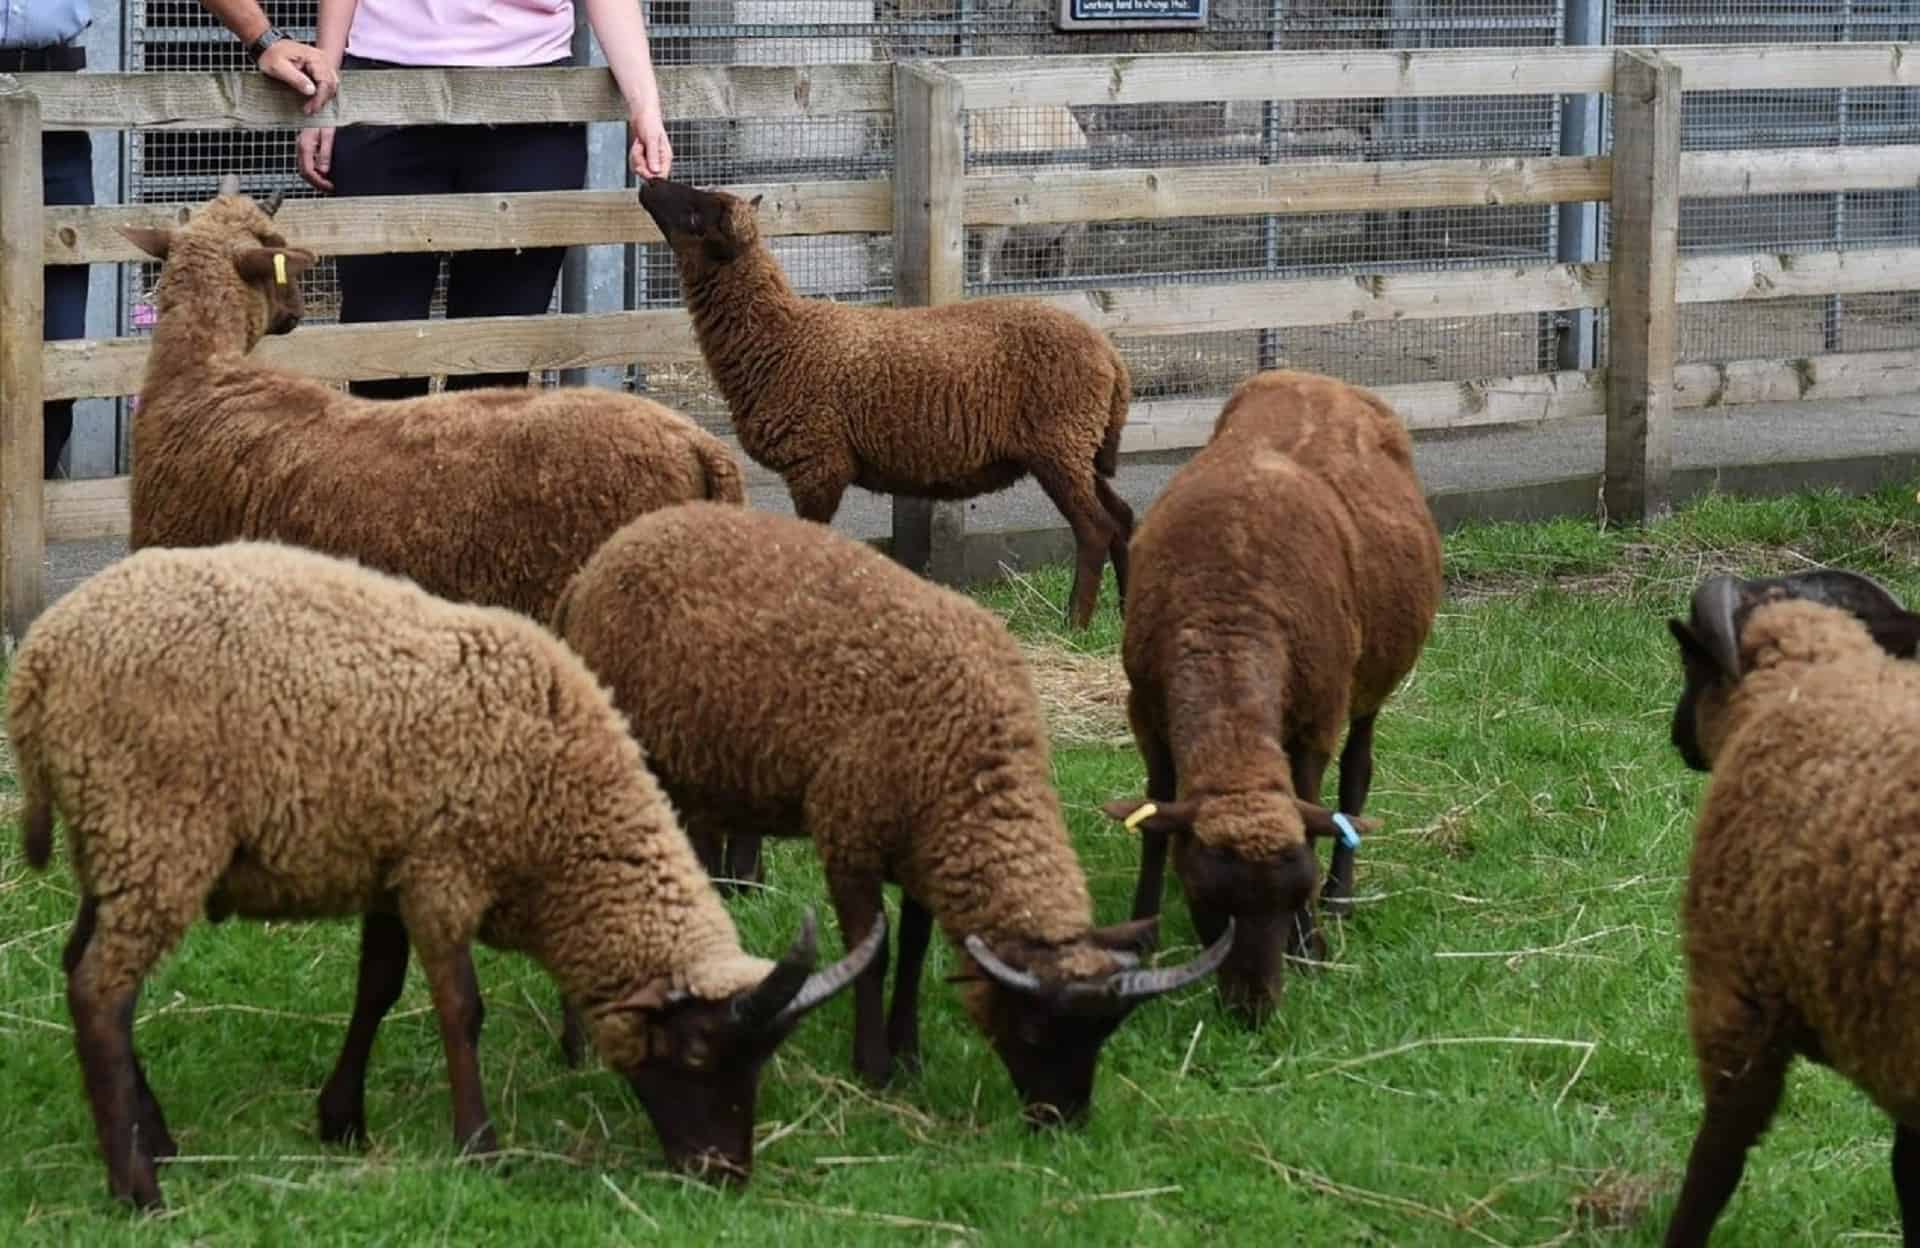 Croxteth Petting Farm in UK